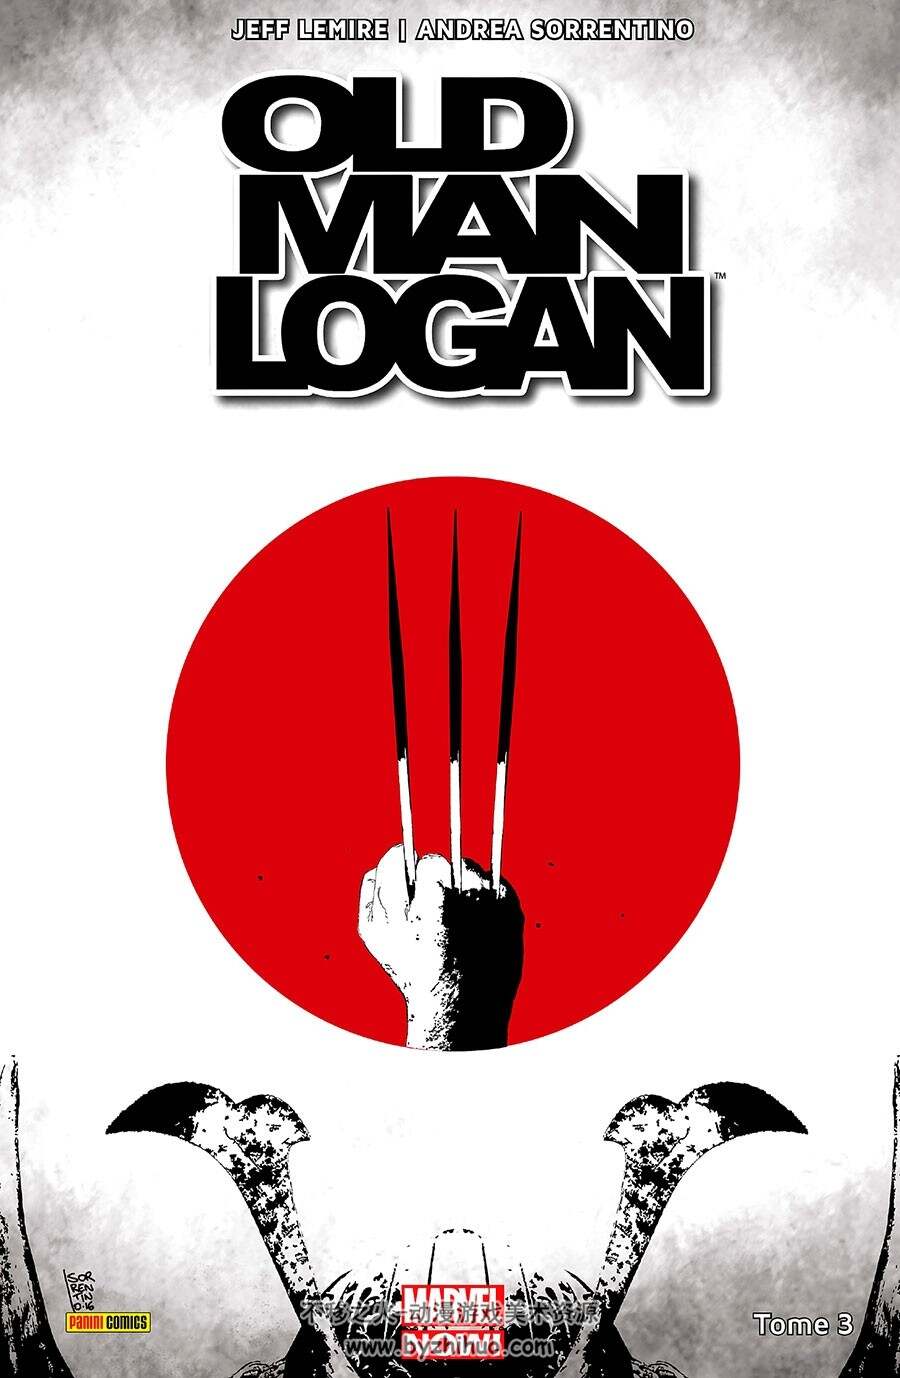 Old Man Logan1-4册 Andrea Sorrentino - Jeff Lemire 漫威超级英雄漫画下载